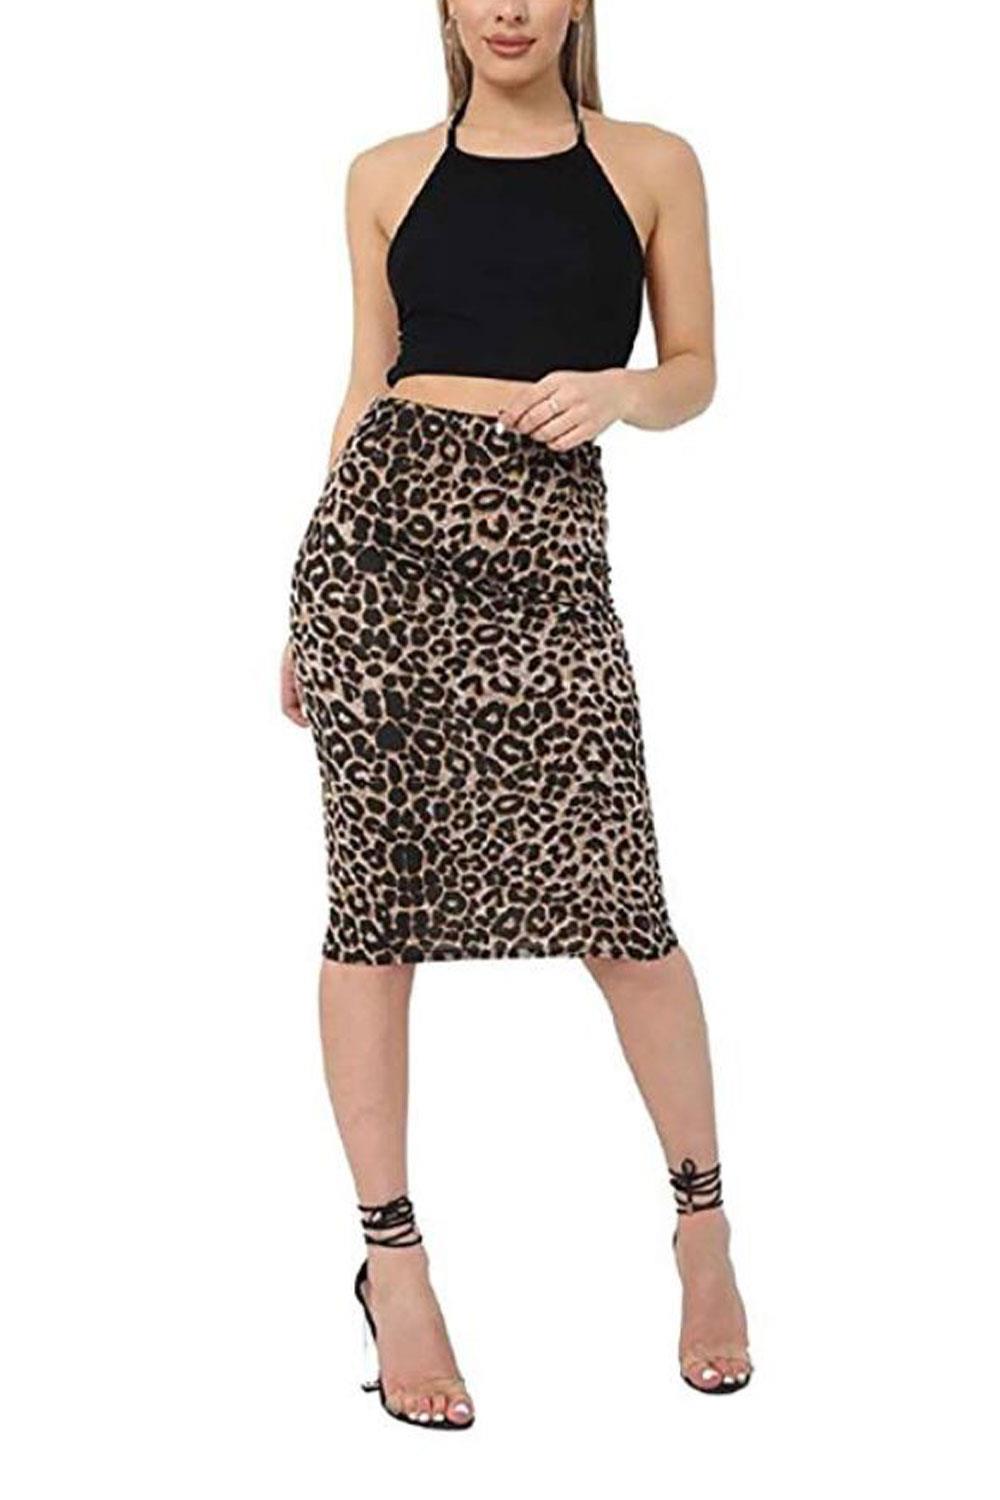 falda leopardo amazon Rimi Hanger, 12€ aprox.